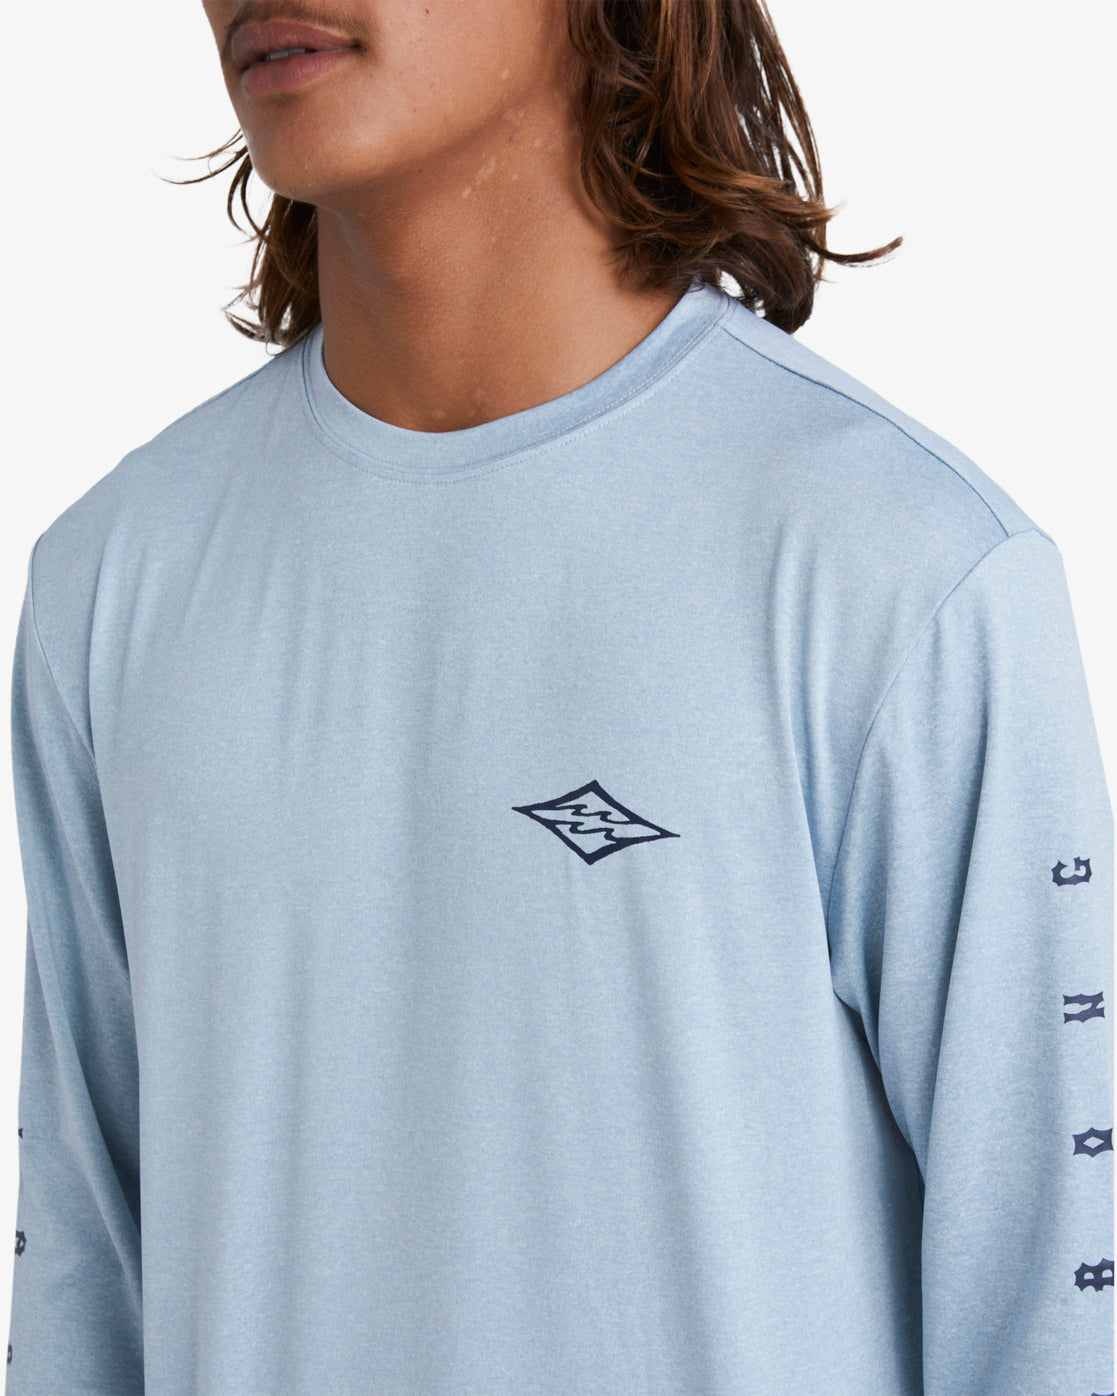 Billabong Hombre Camiseta WAVE DAZE TEE(Grey Heather)